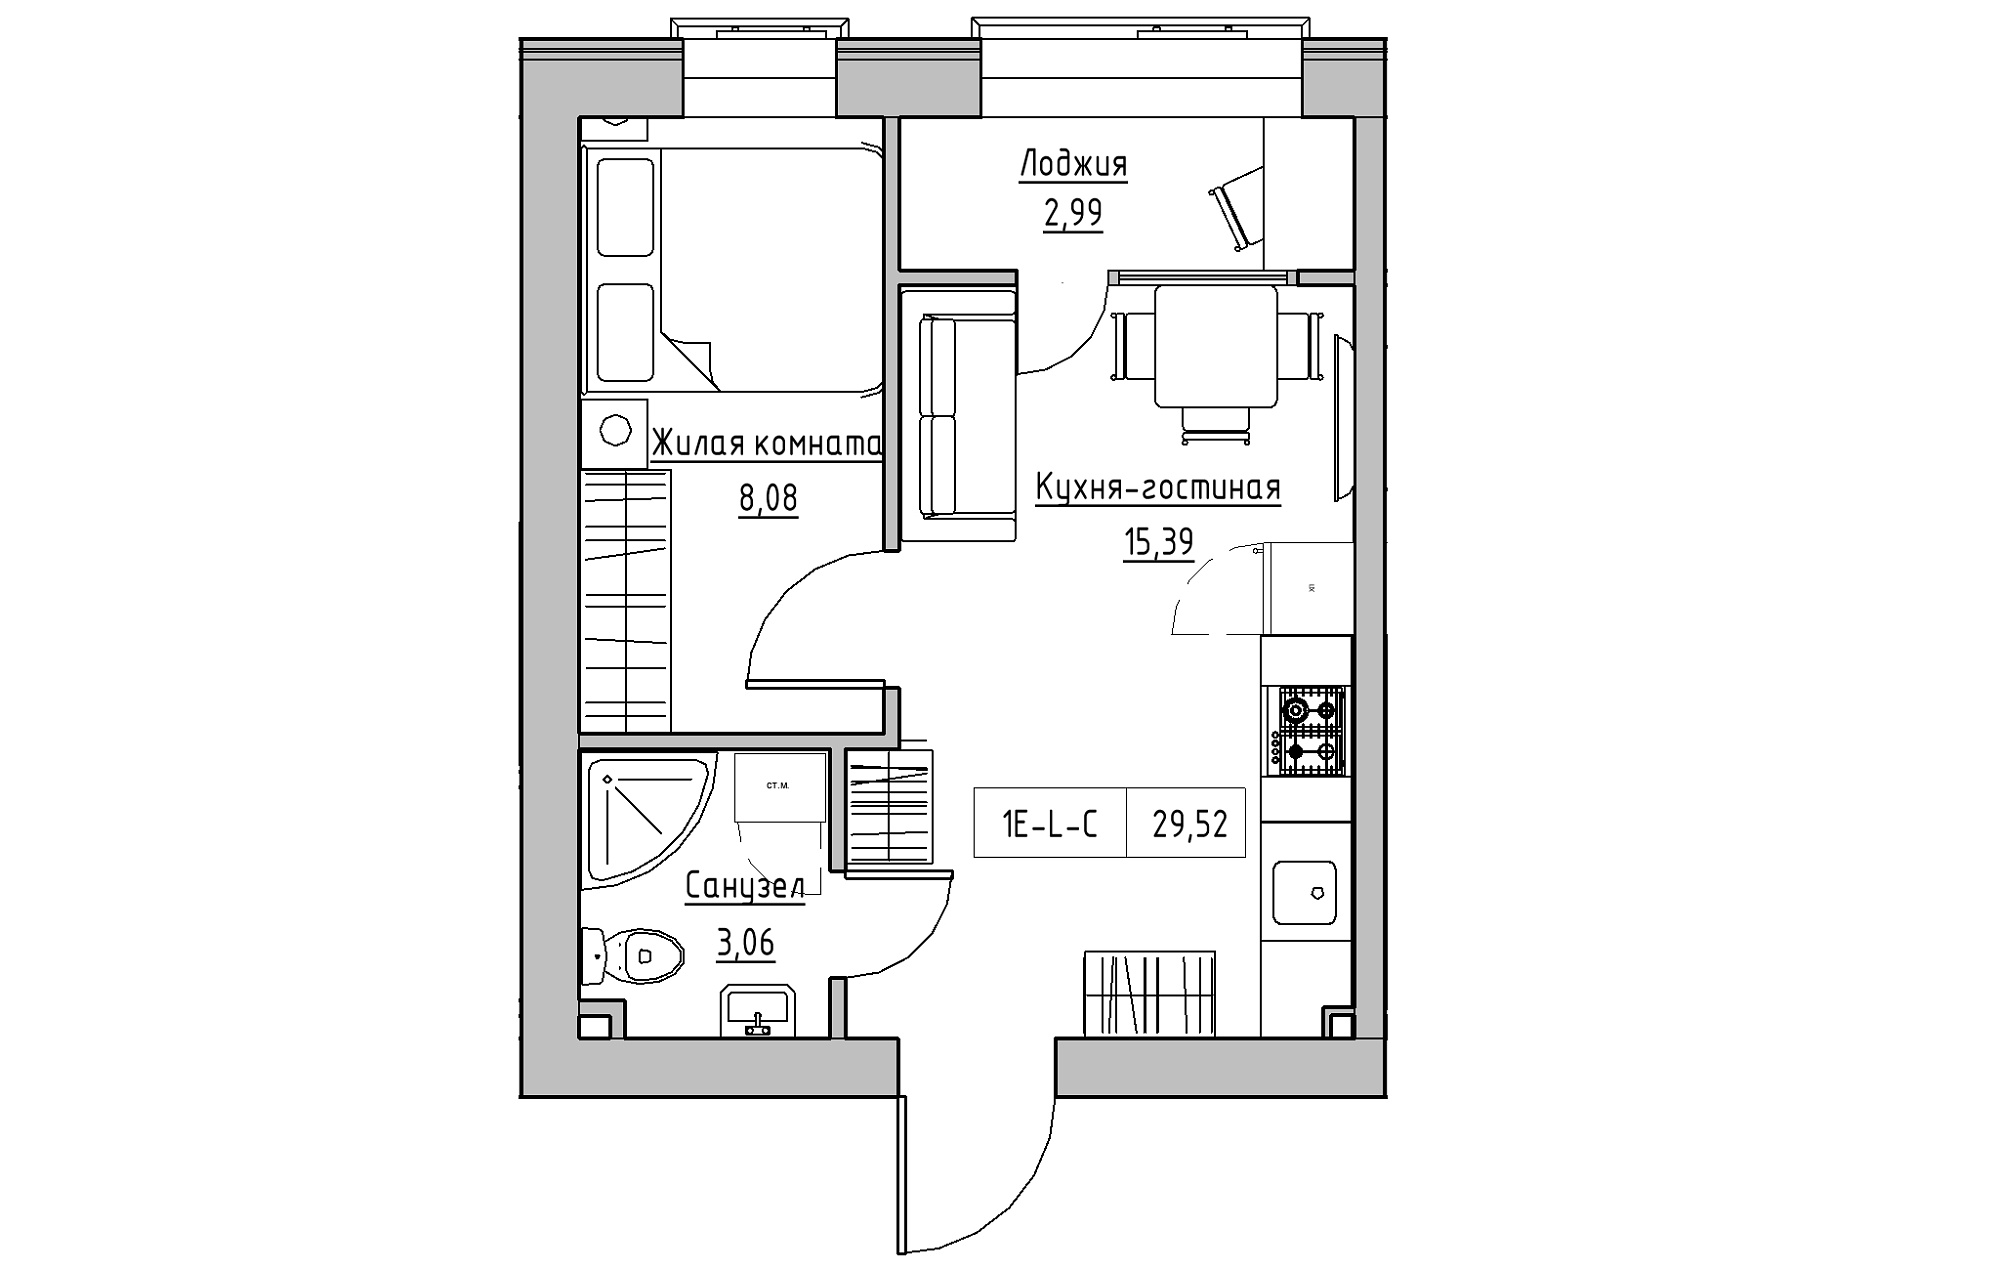 Planning 1-rm flats area 29.52m2, KS-018-03/0006.